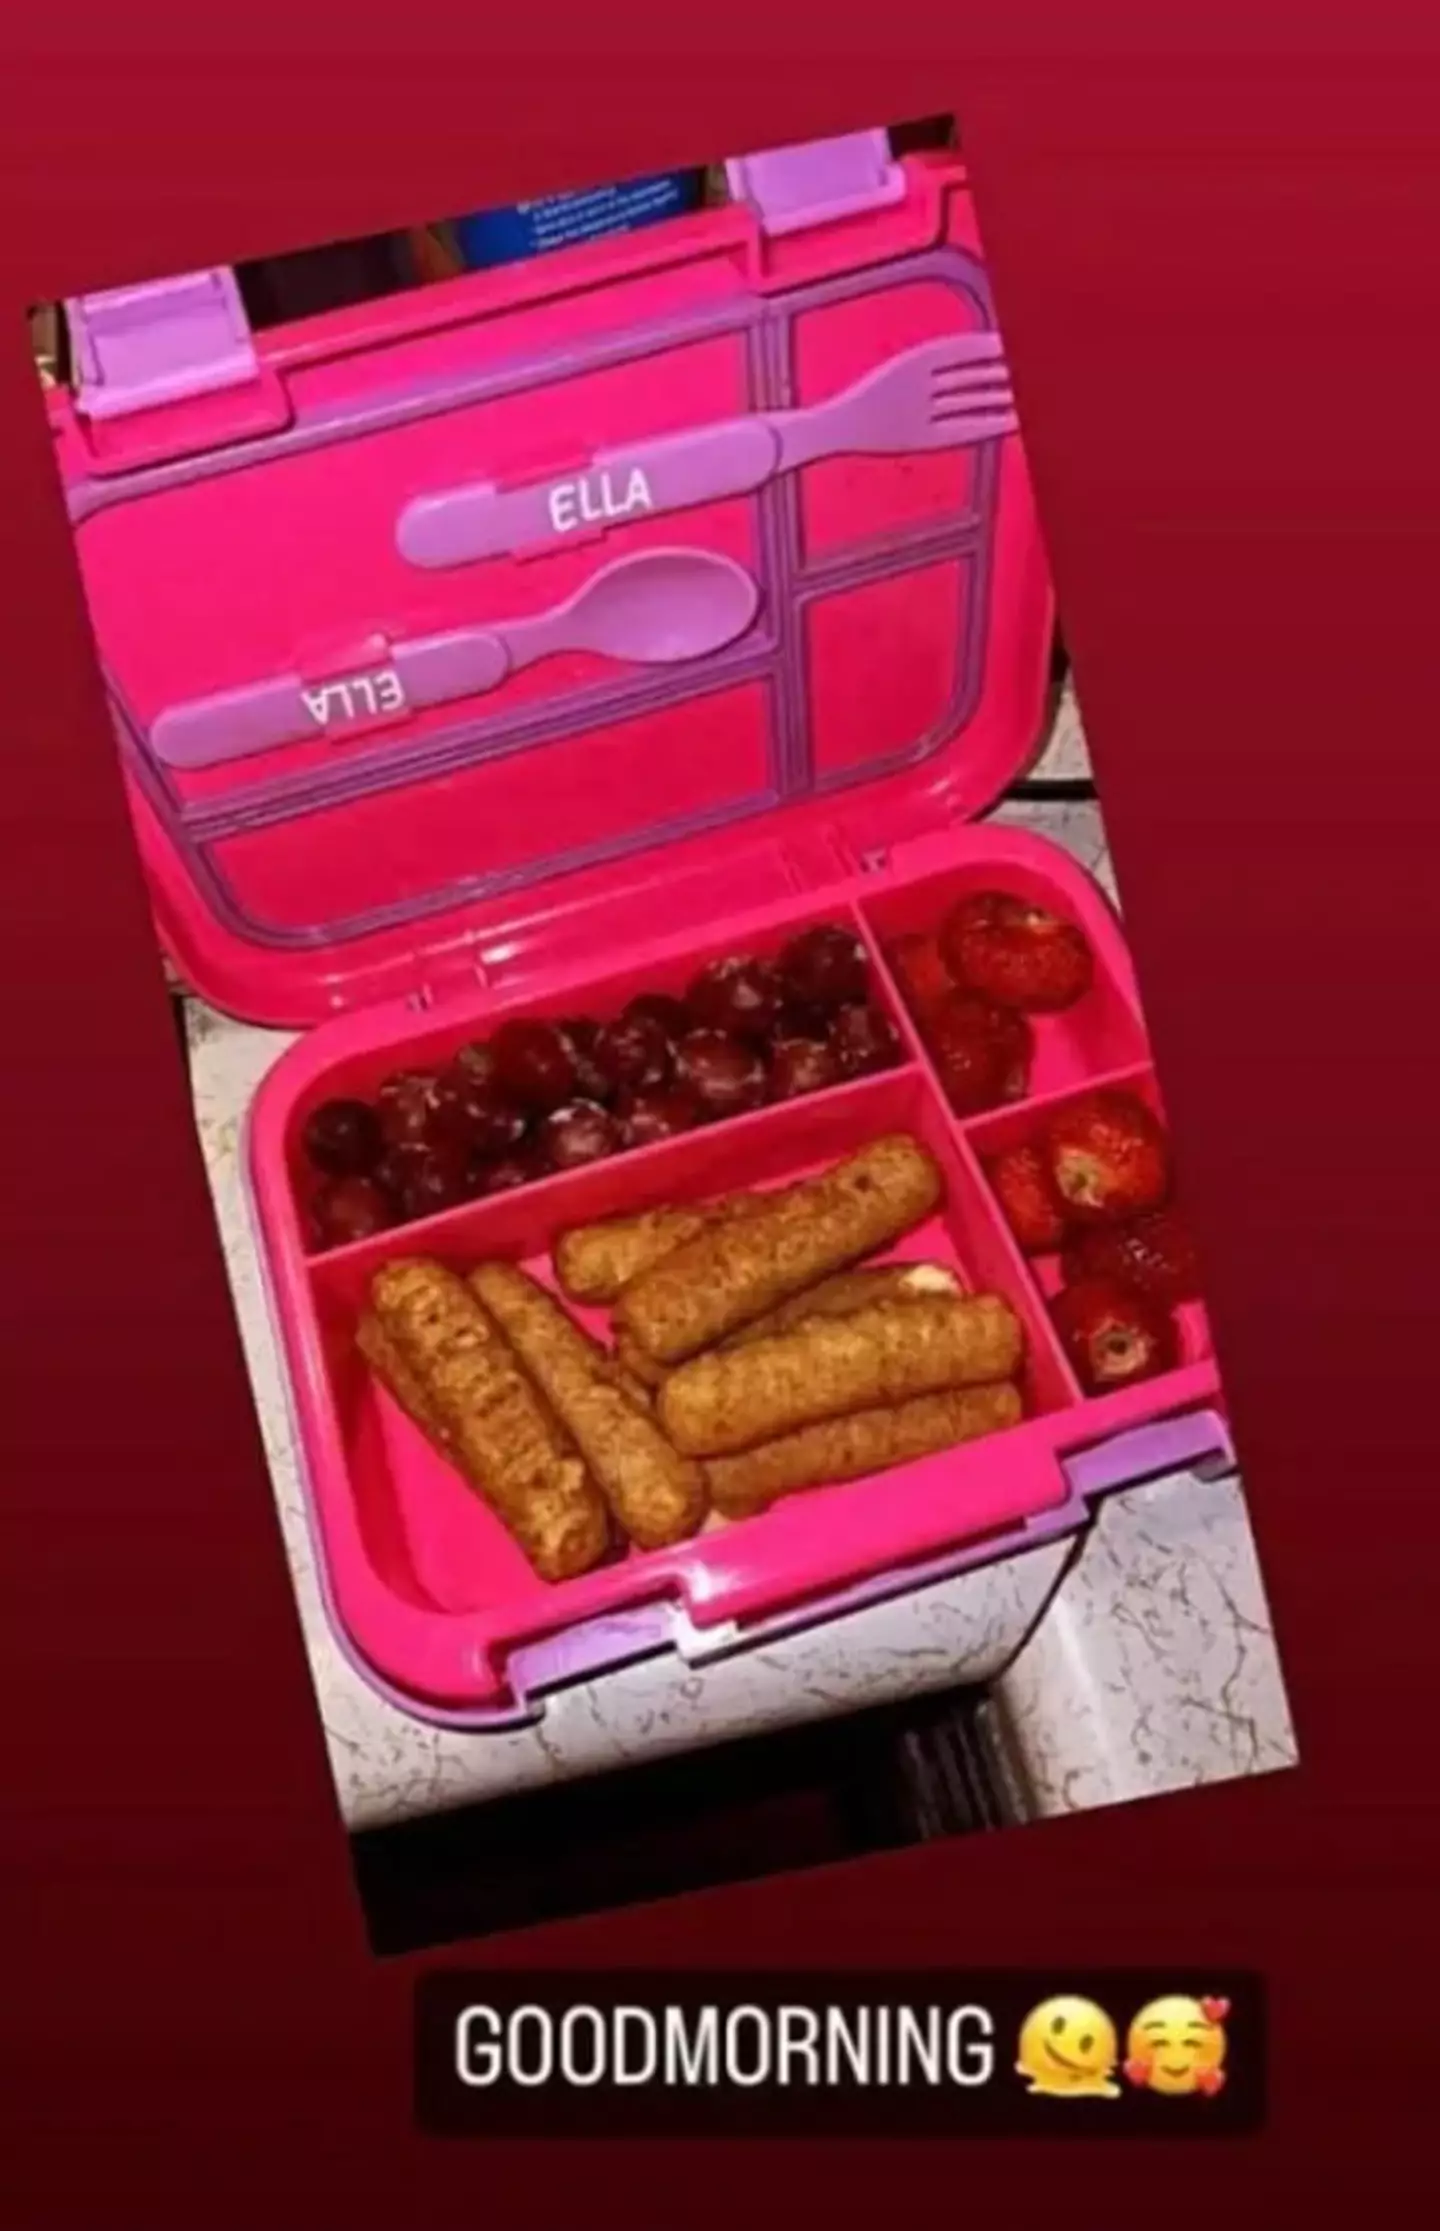 Lauryn shared a snap of Ella's lunch box.